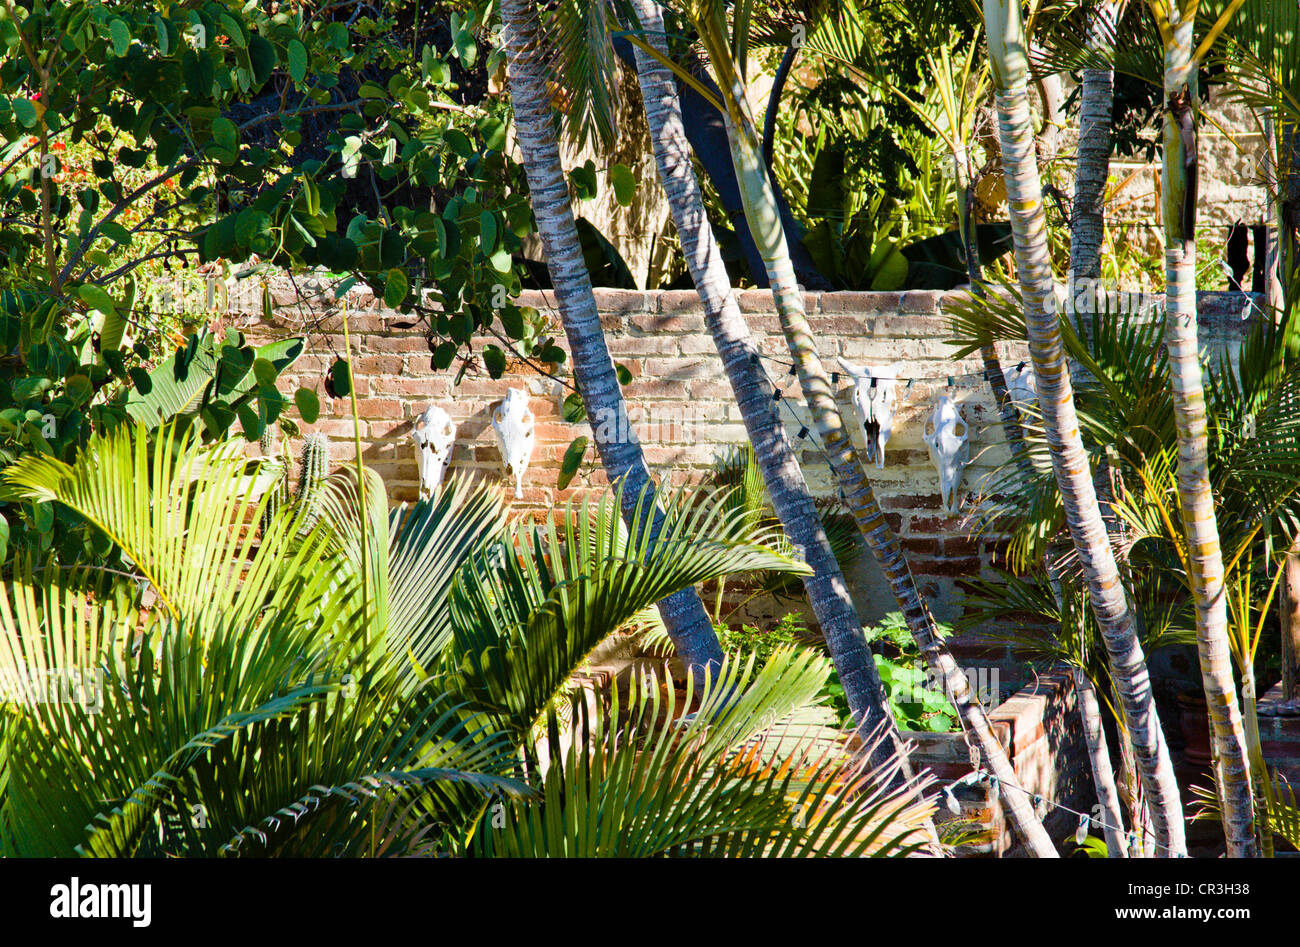 Steer skulls hanging on brick wall in lush garden in 'Todos Santos' Baja Mexico Stock Photo